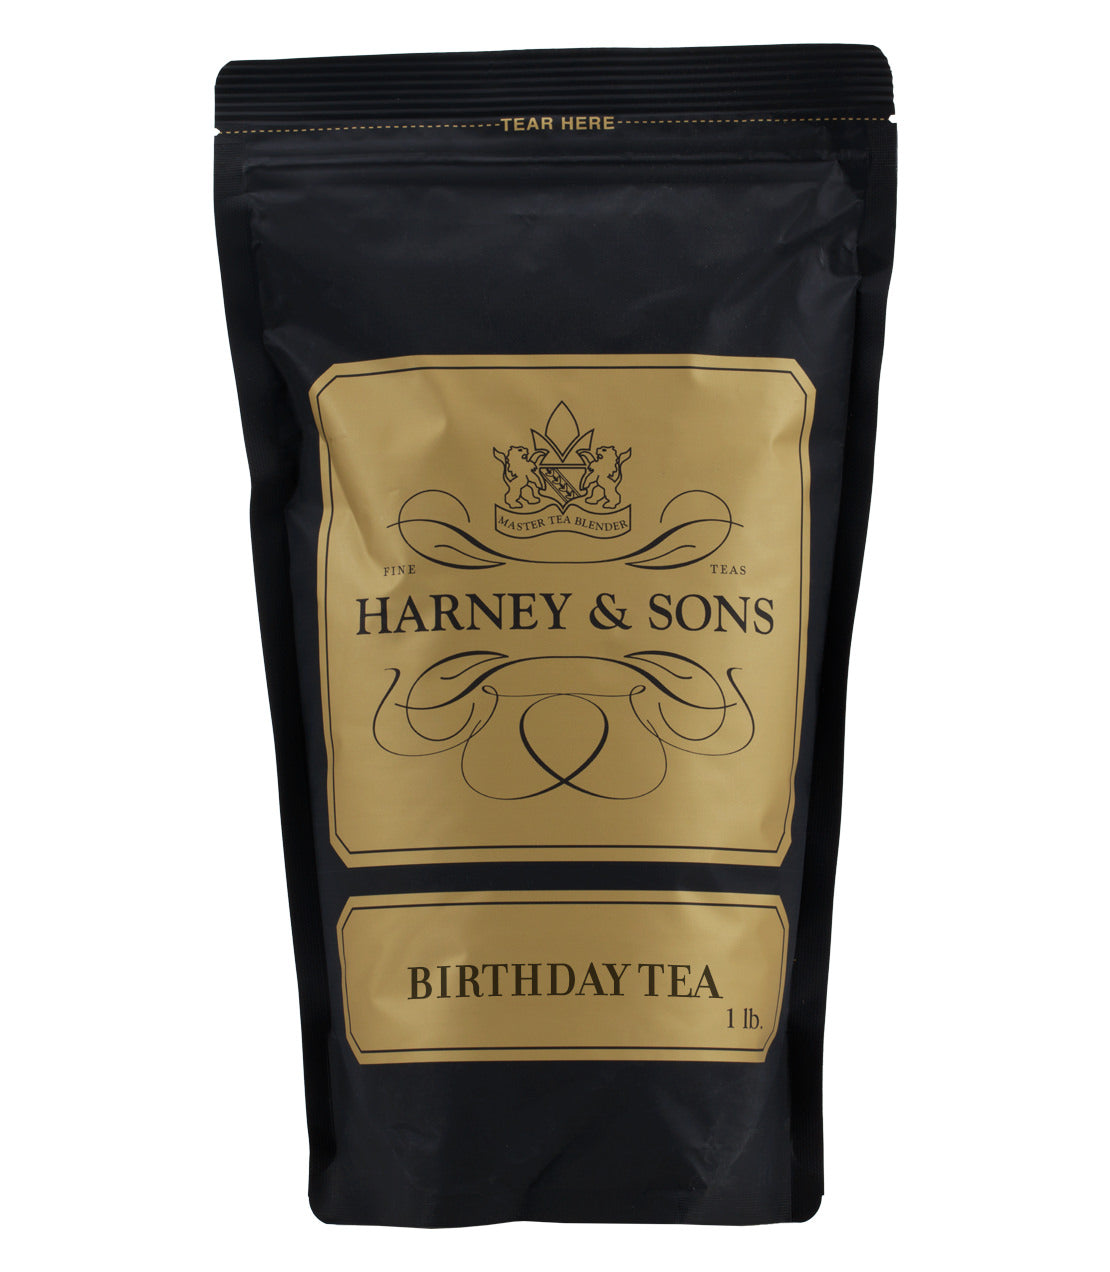 Birthday Tea - Loose 1 lb. Bag - Harney & Sons Fine Teas